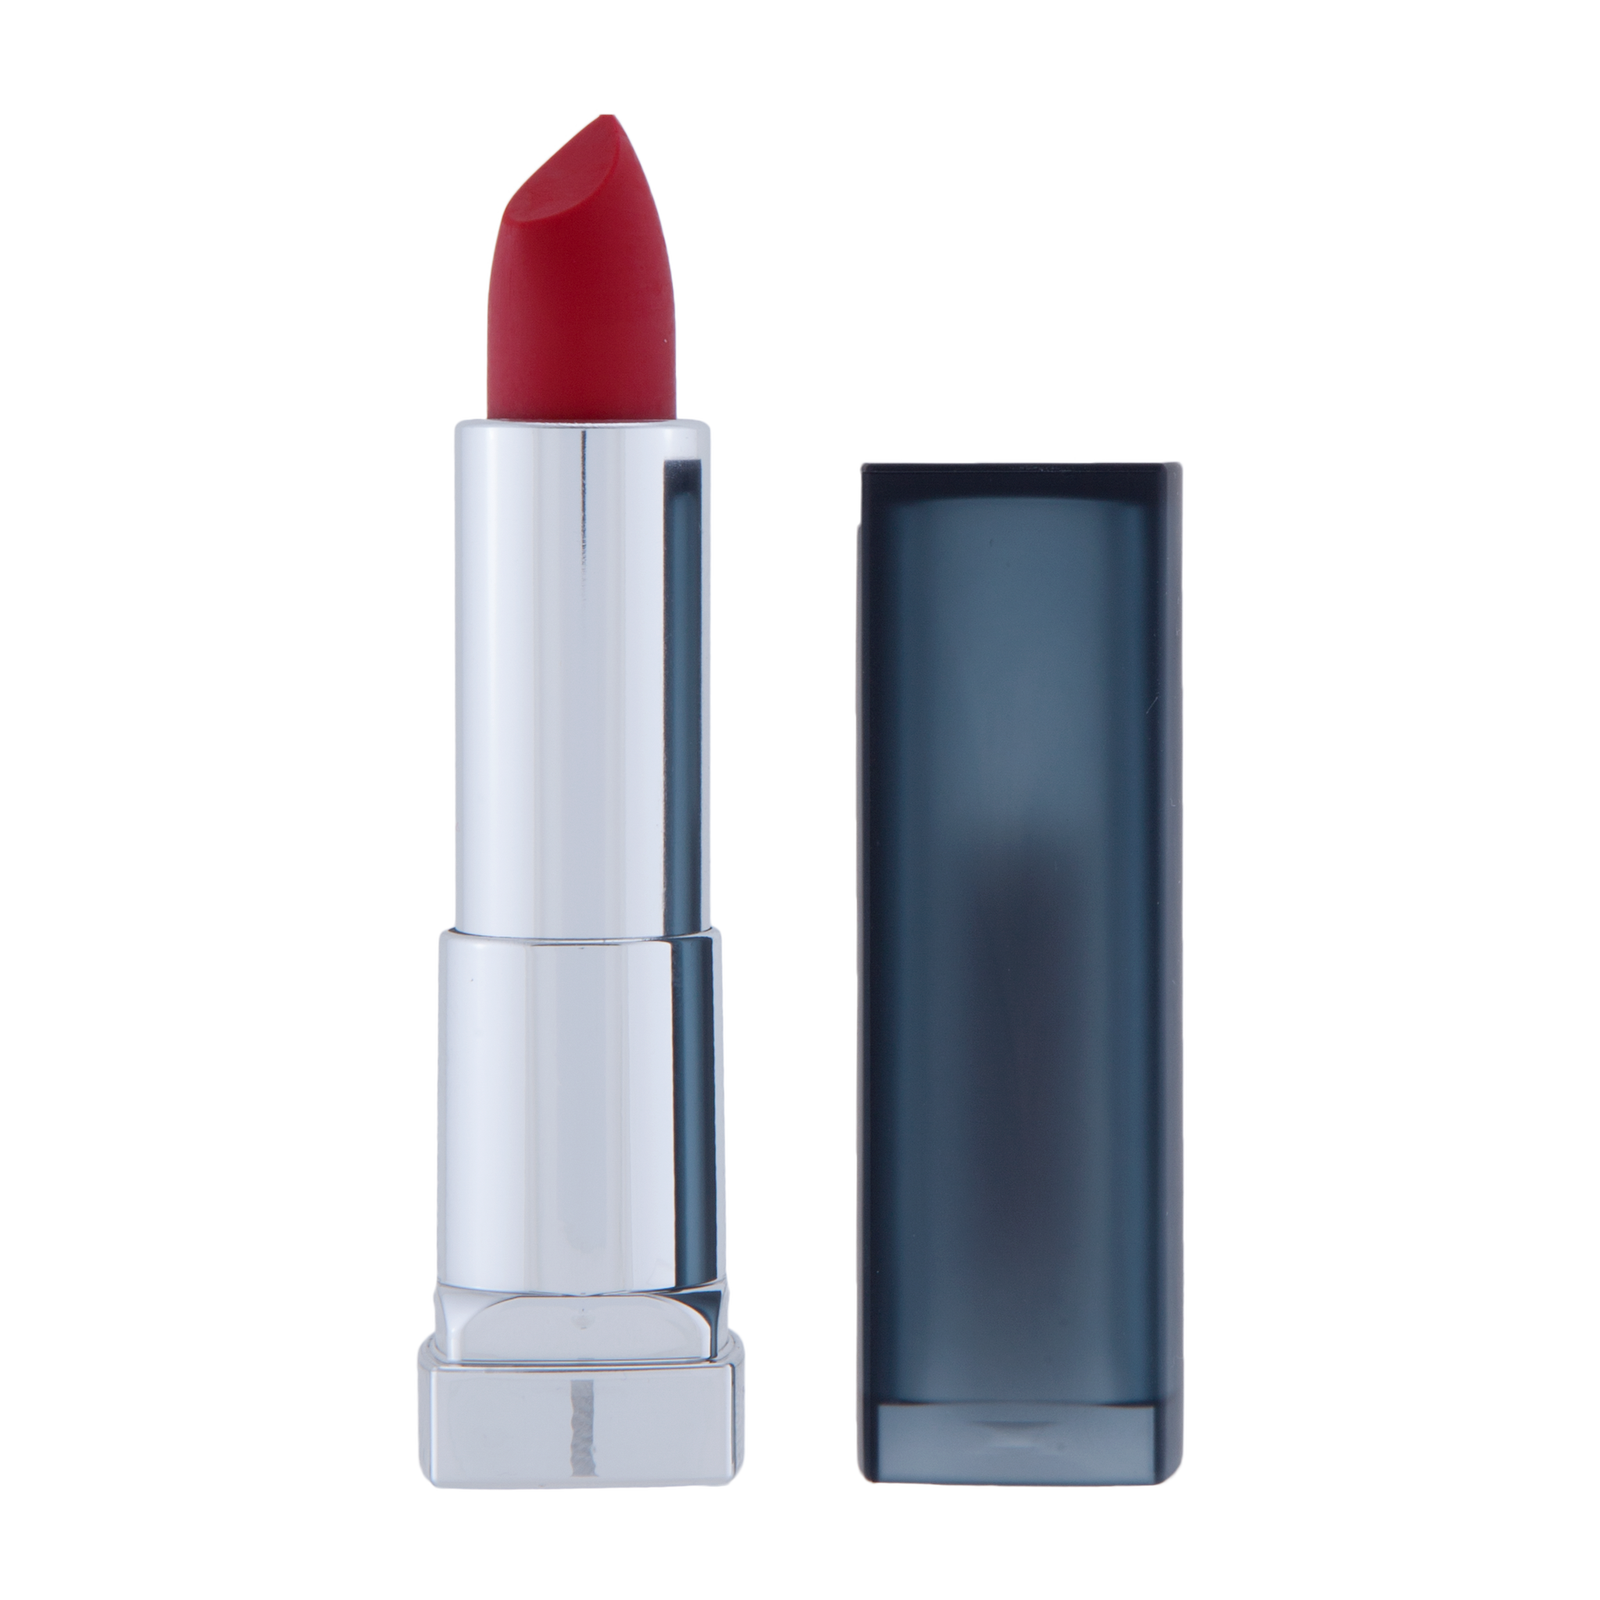 Красная помада недорогая хорошая косметика от Max Factor Avon Maybelline NY Sleek Make Up | Allure